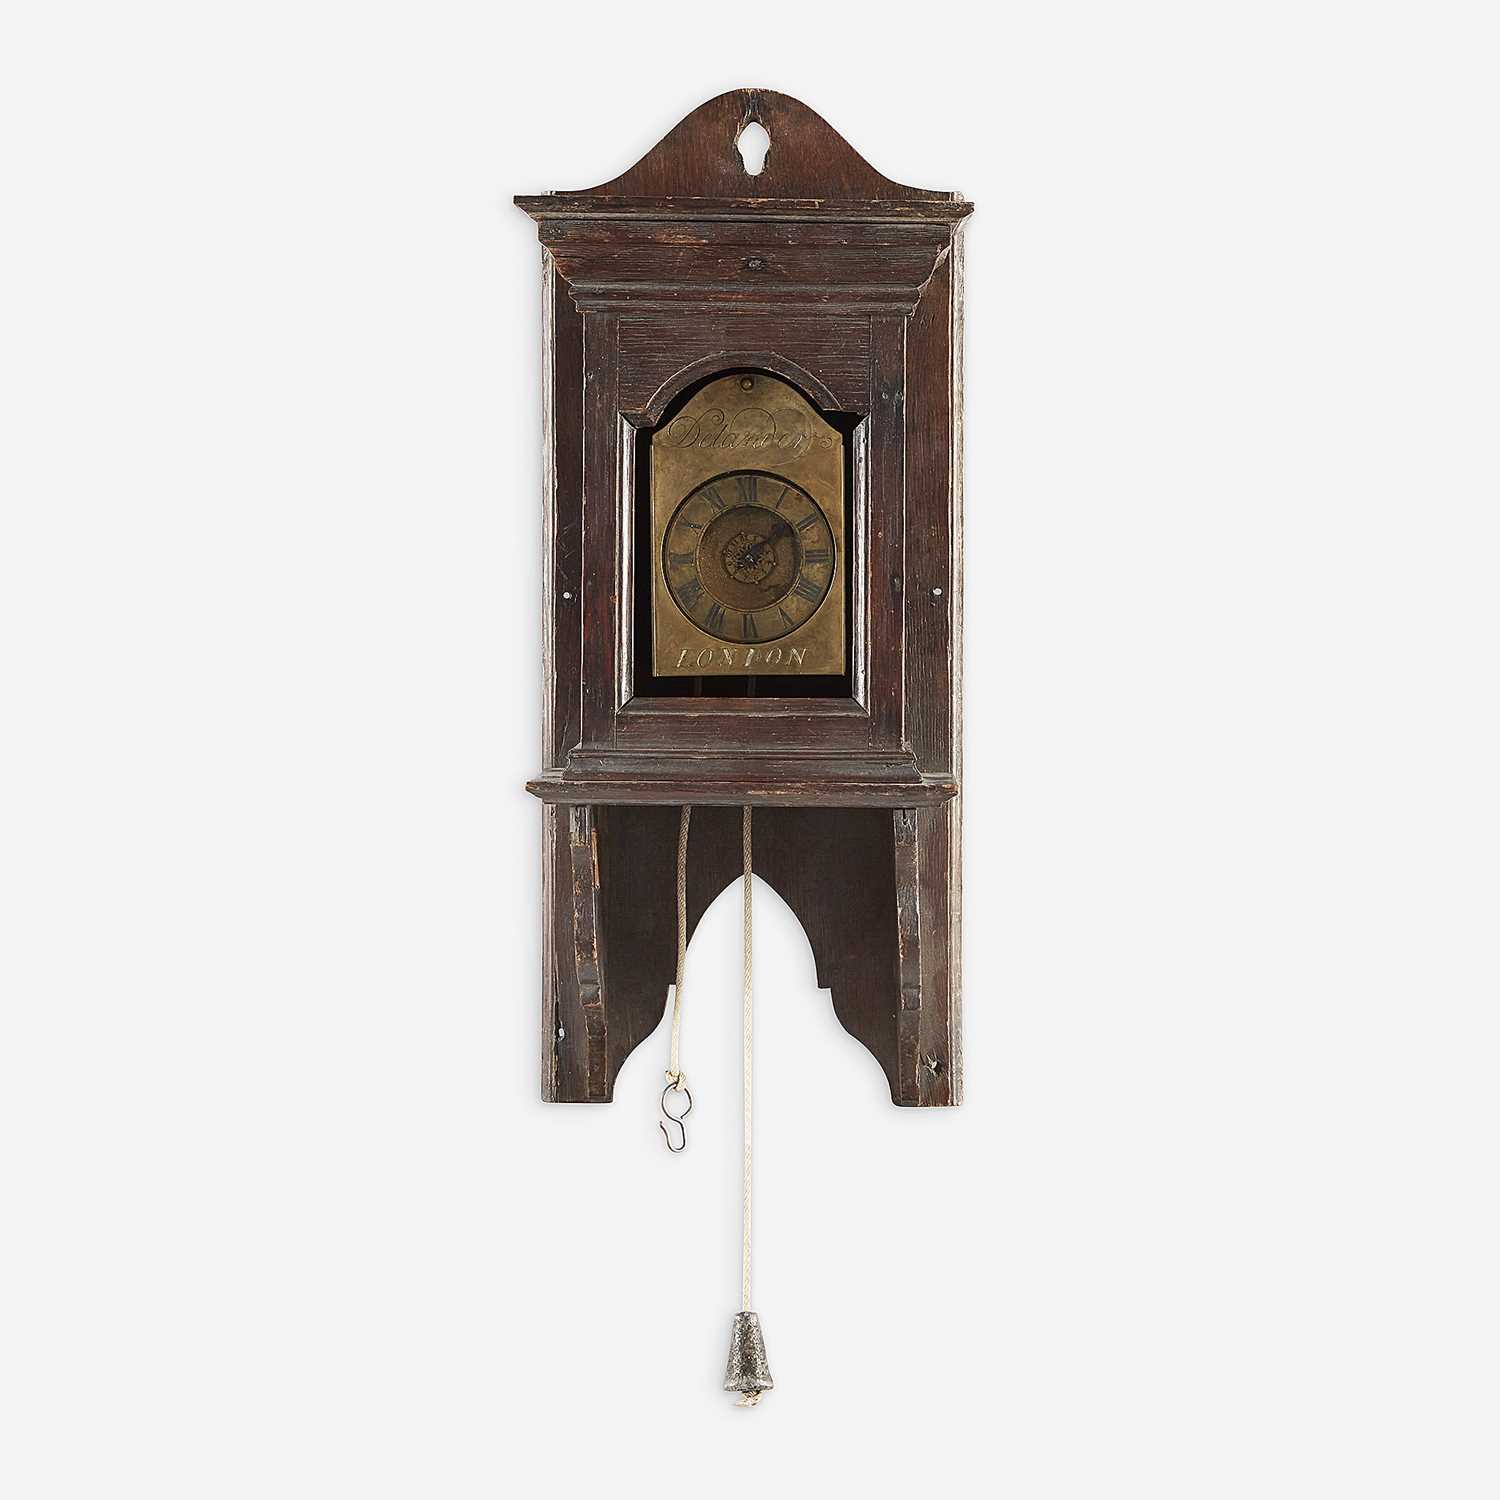 Lot 18 - A George I oak and brass wall clock